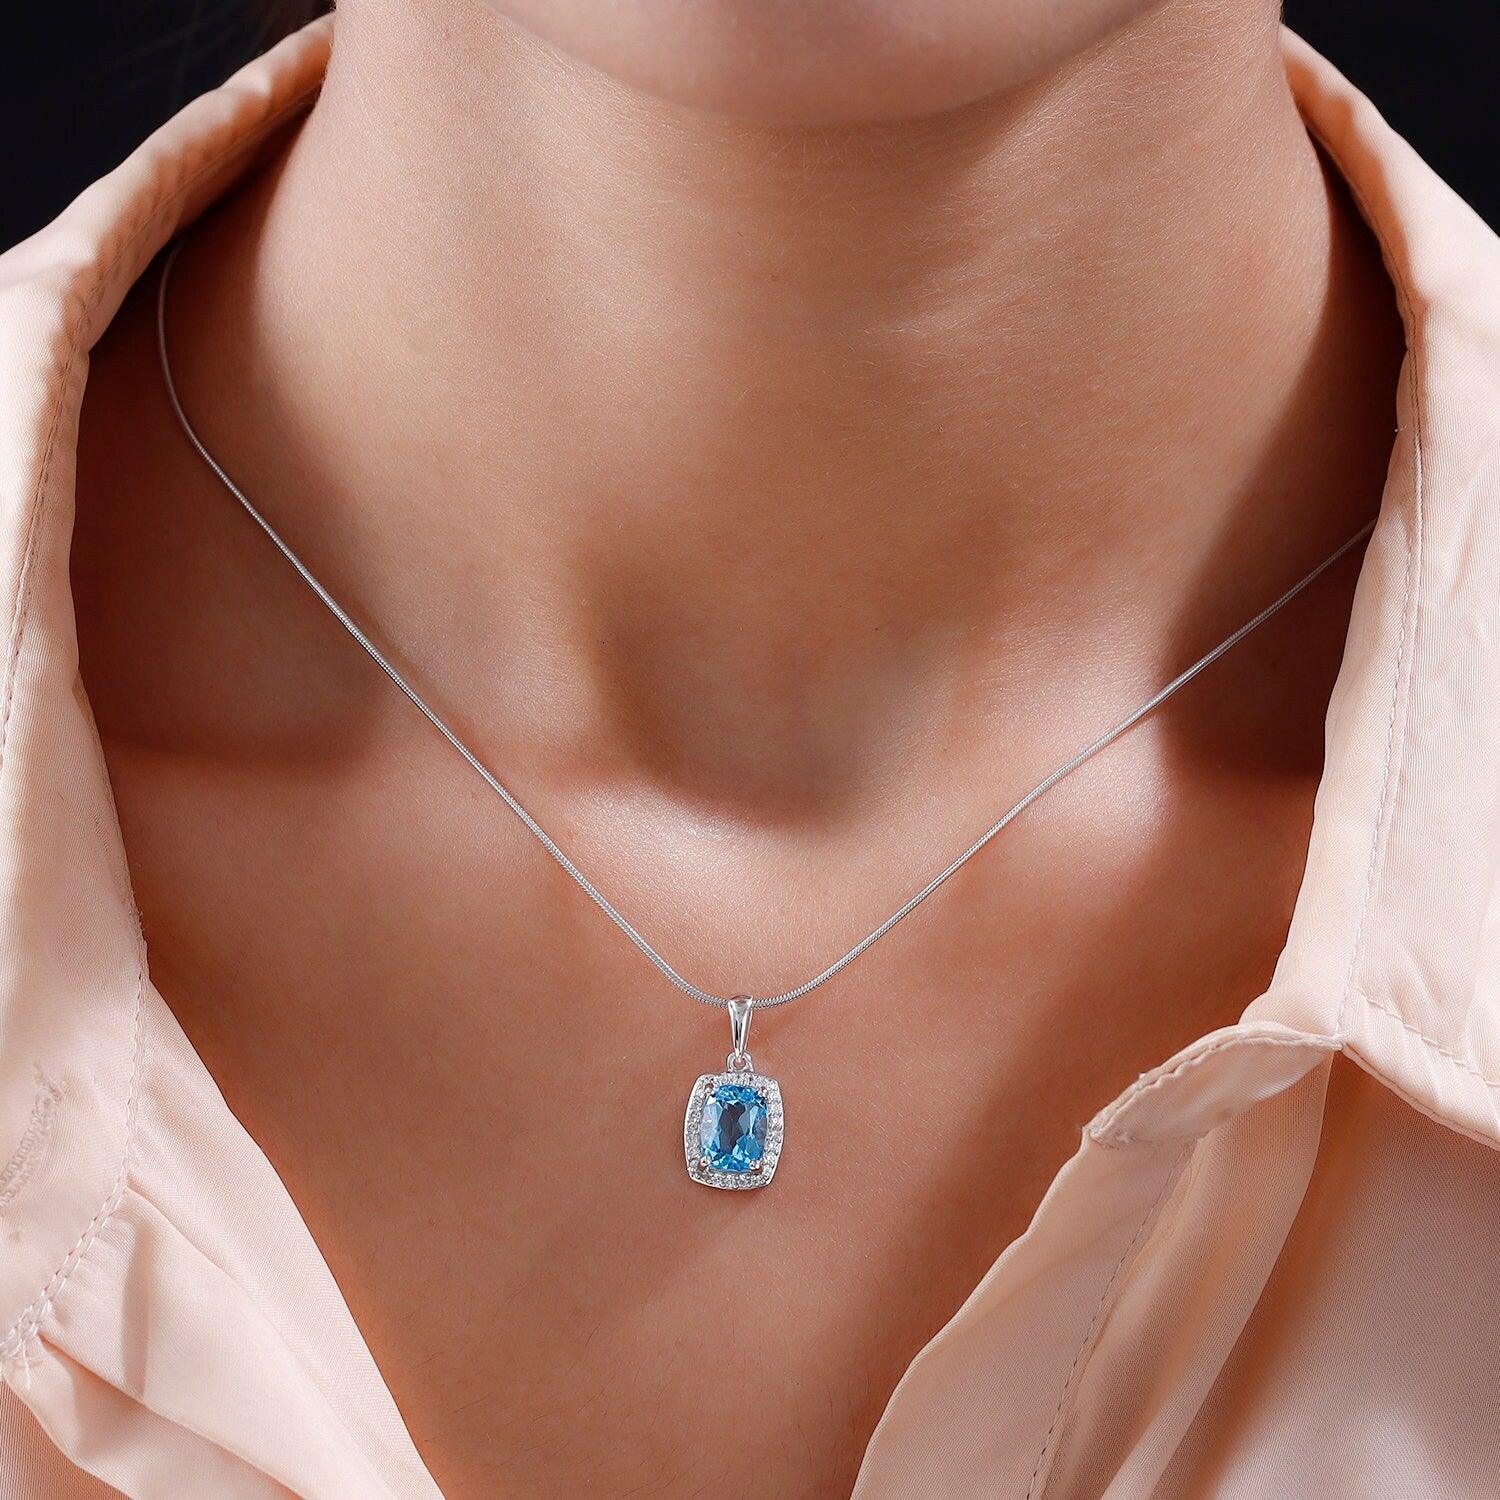 Genuine Swiss Blue Topaz Pendant, Halo Pendant, December Birthstone Necklace, 925 Sterling Silver, Gift for her - Inspiring Jewellery